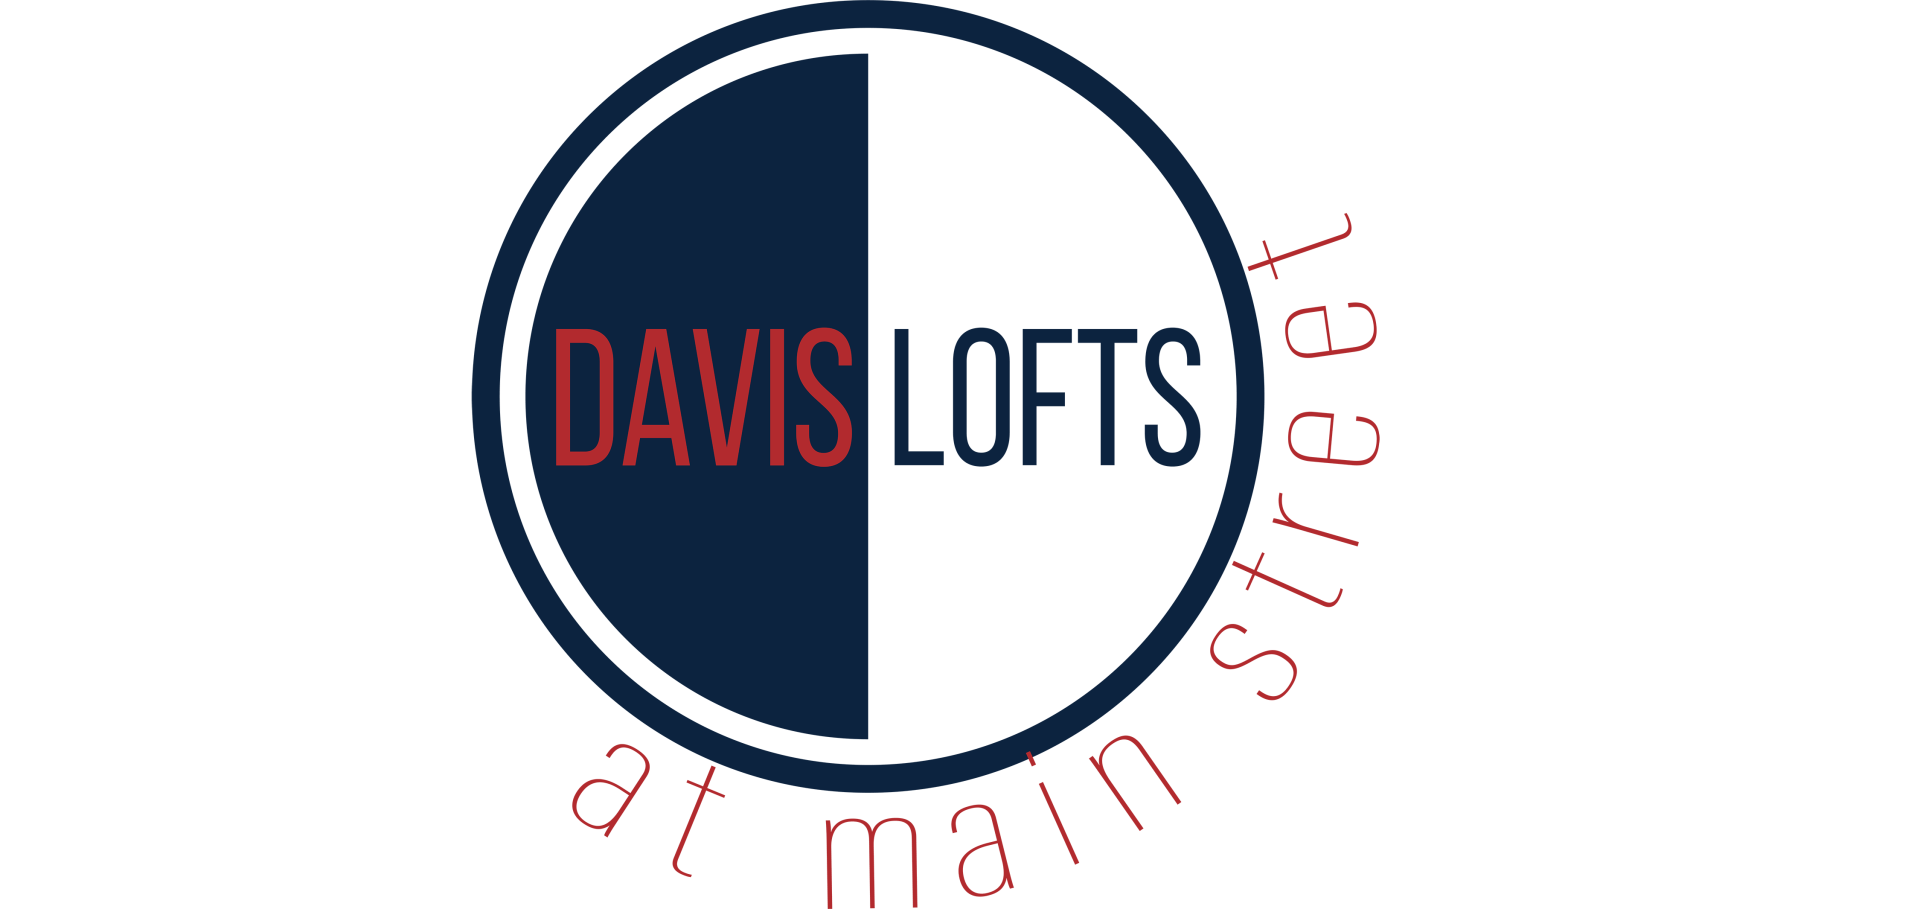 The Davis Lofts logo